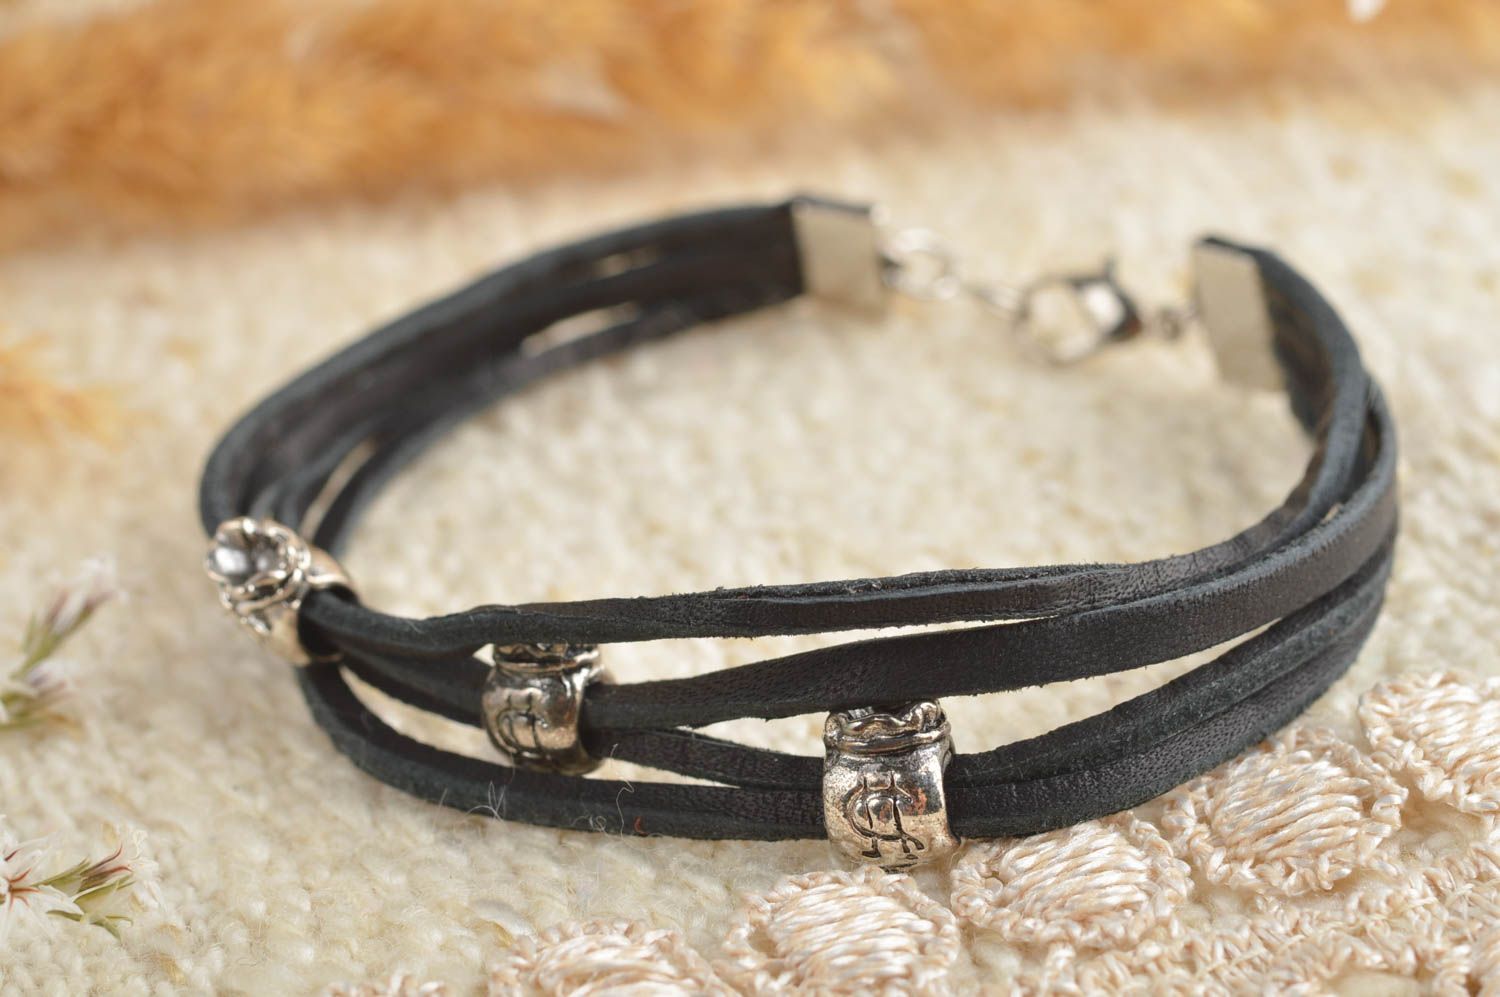 Handmade leather bracelet wrist bracelet black bracelets for women cool gifts photo 1